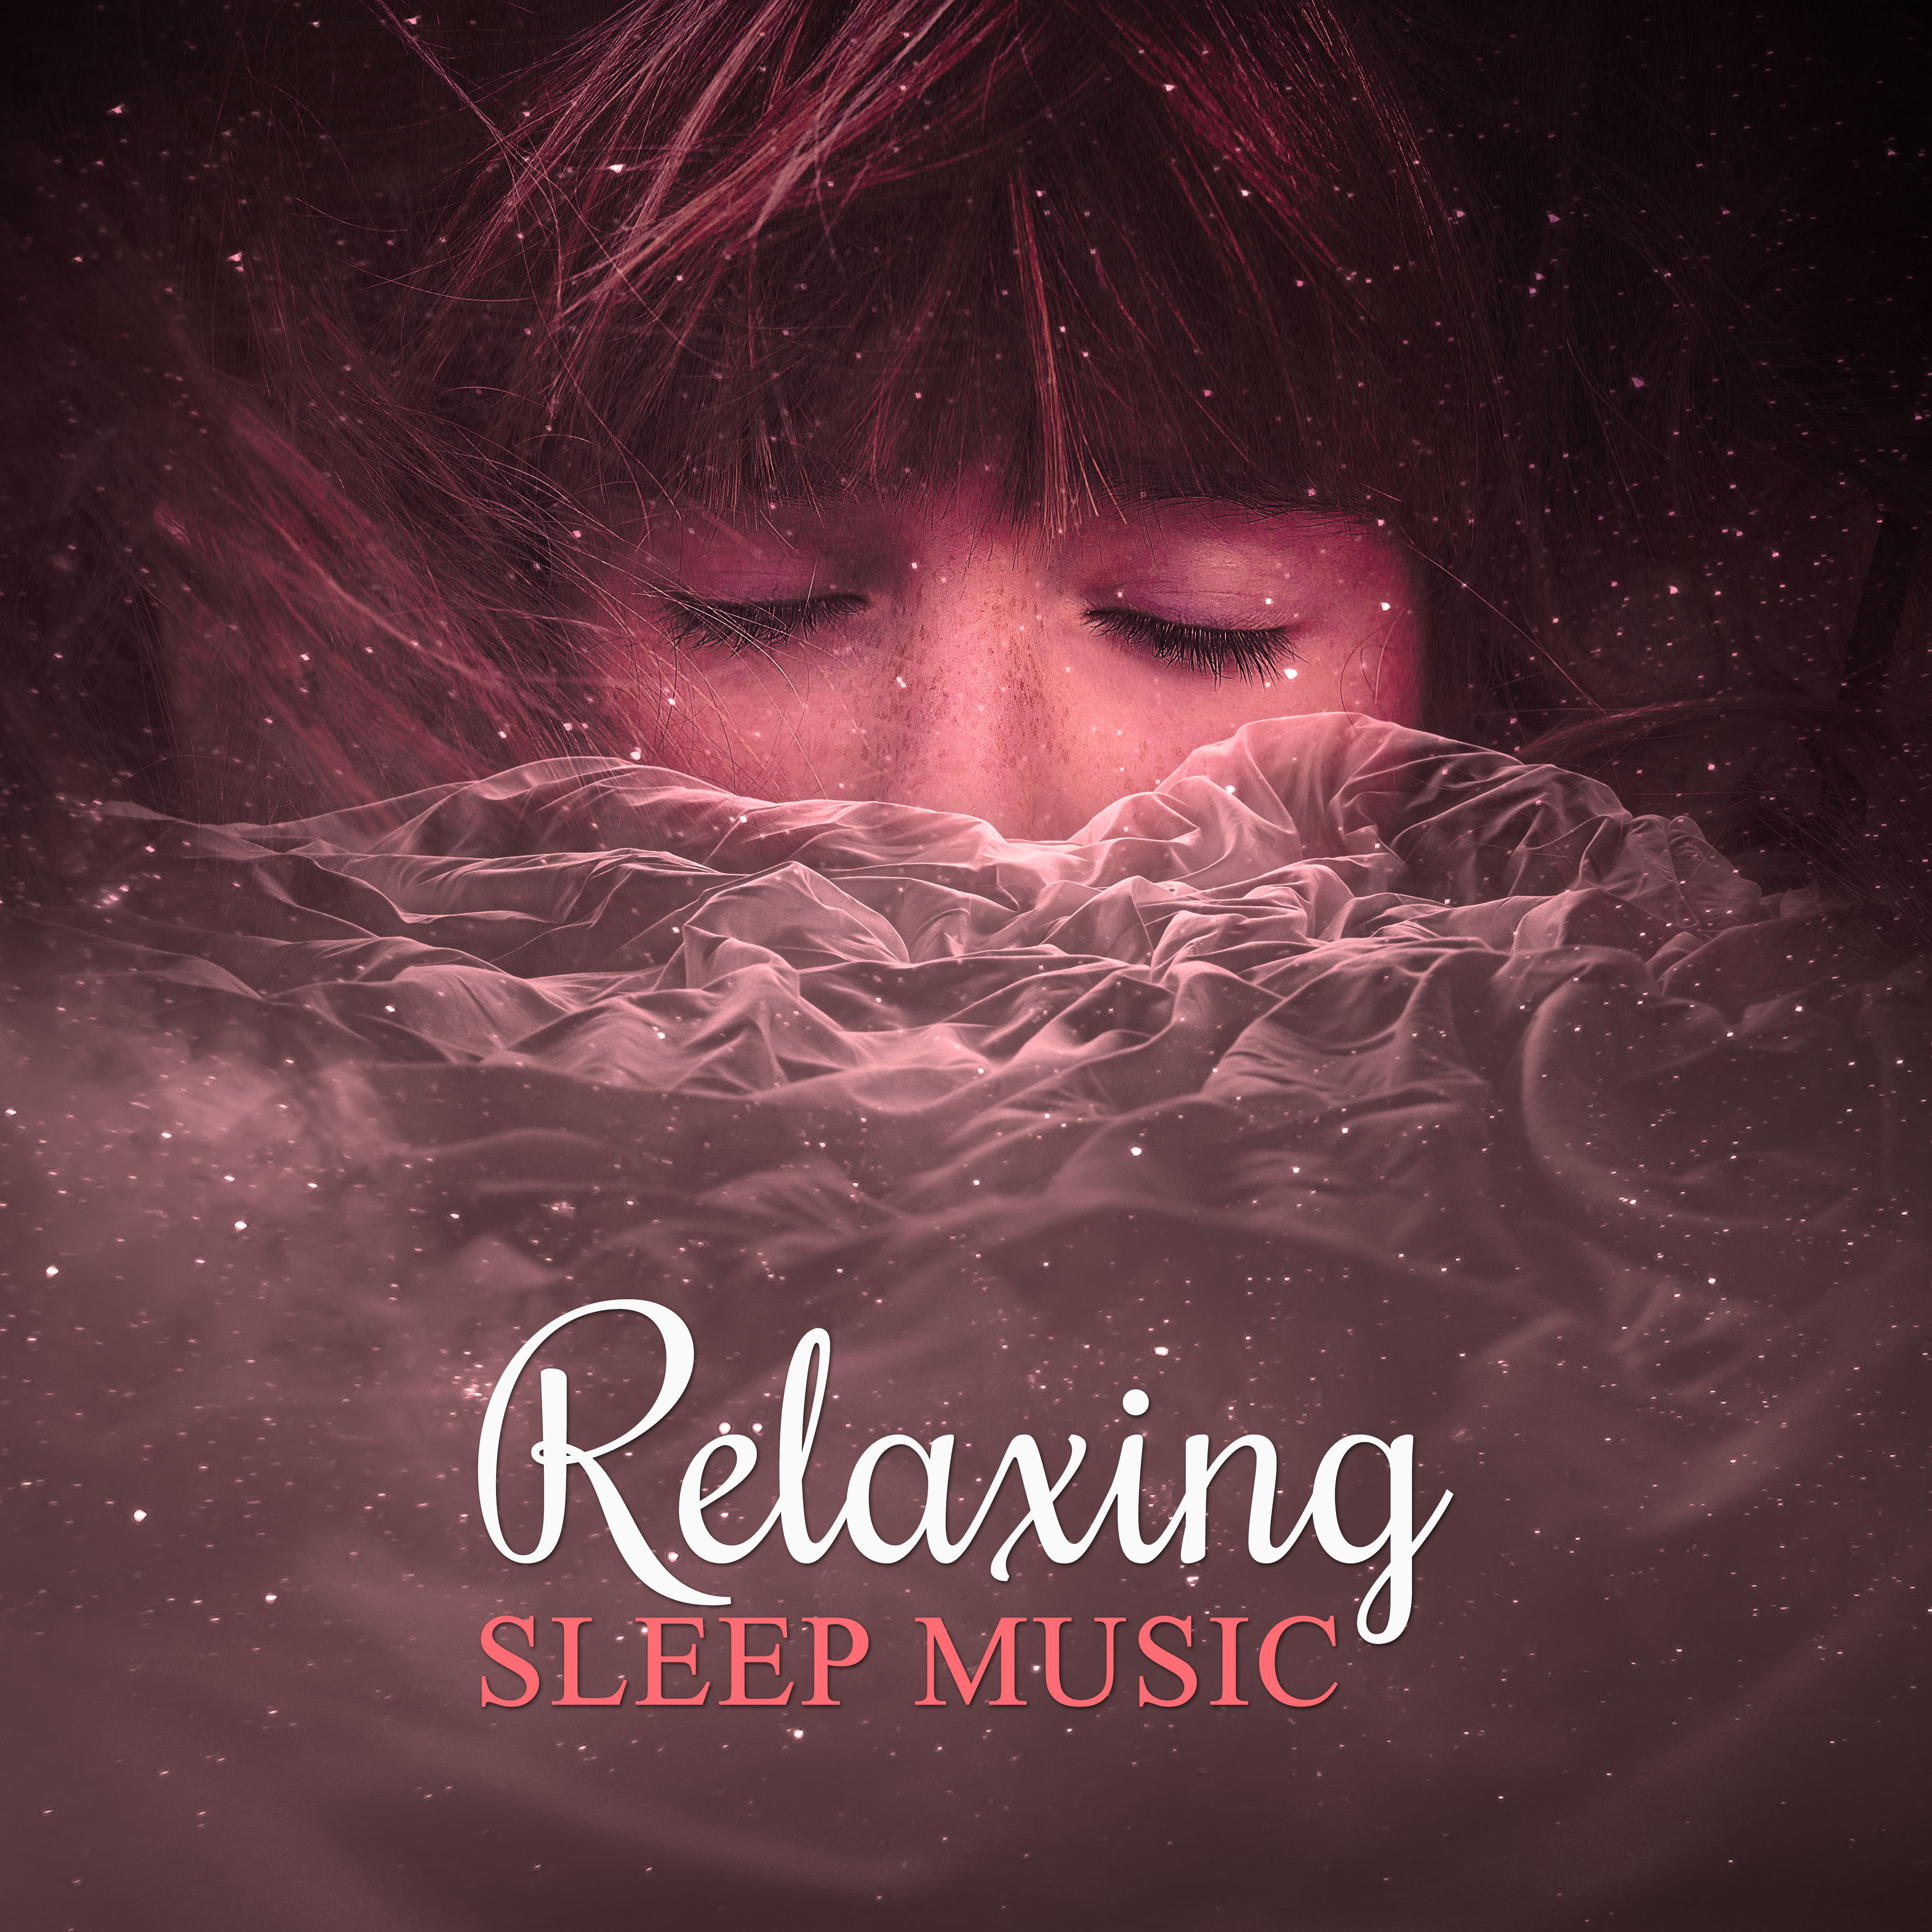 Relaxing Sleep Music  Beautiful Sounds of Nature, Sleep Music to Help You Easily Fall Asleep  Have a Nice Dream